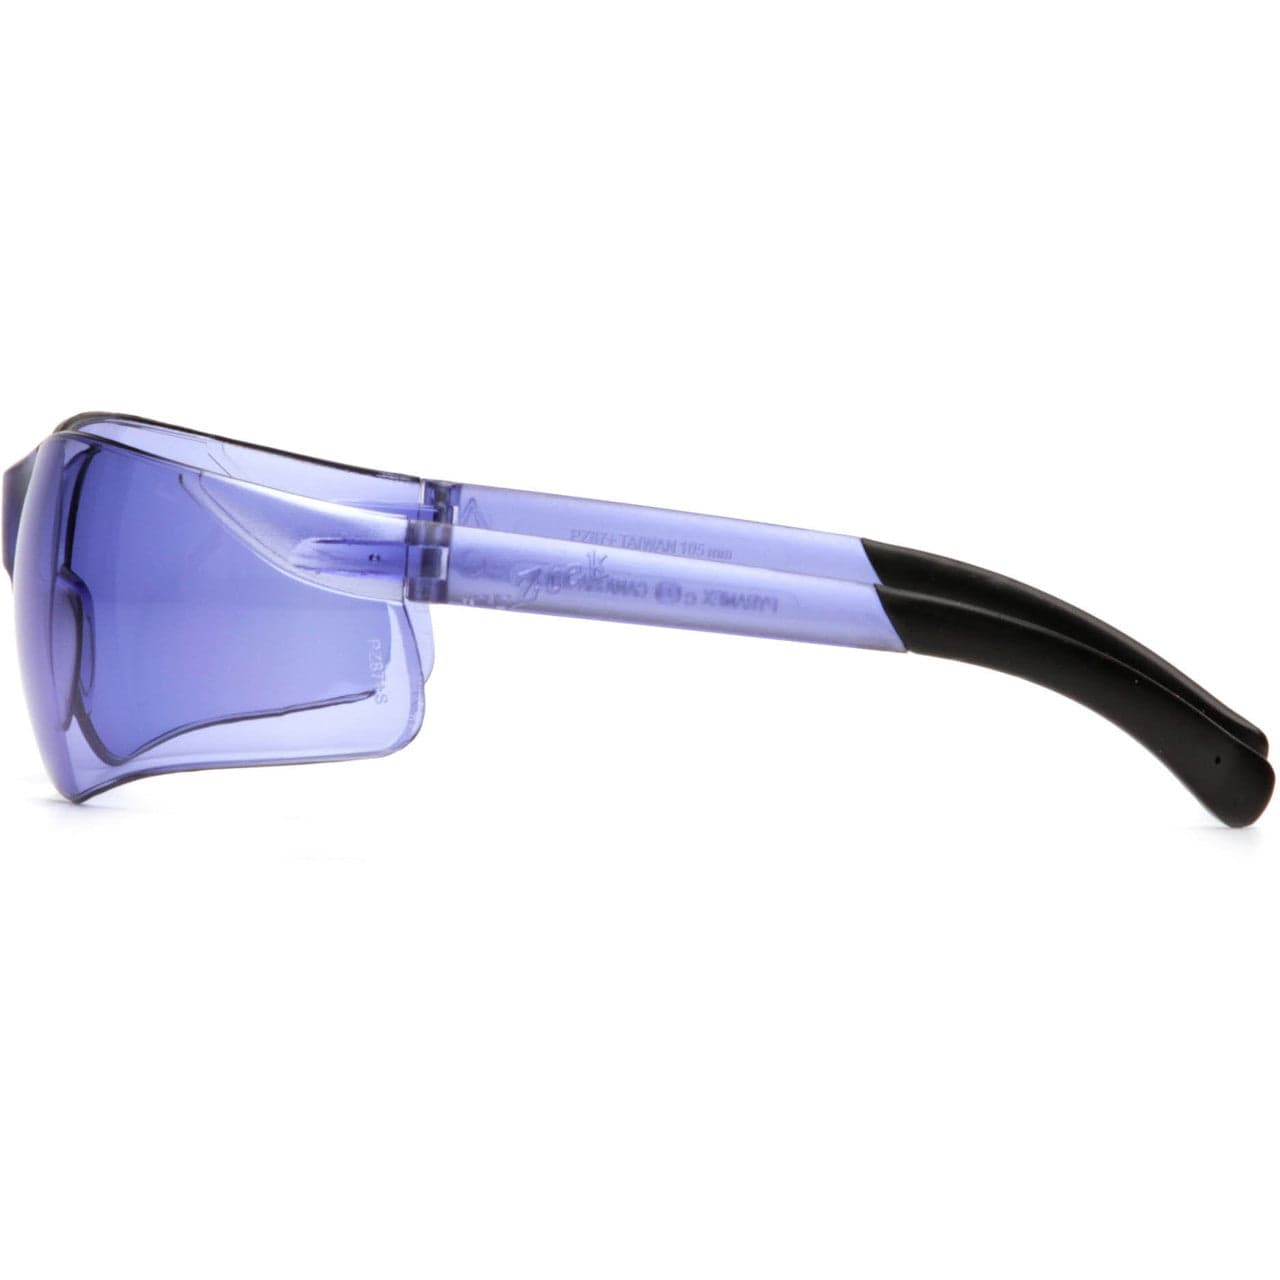 Pyramex Ztek Safety Glasses with Purple Haze Lens S2565S Side View